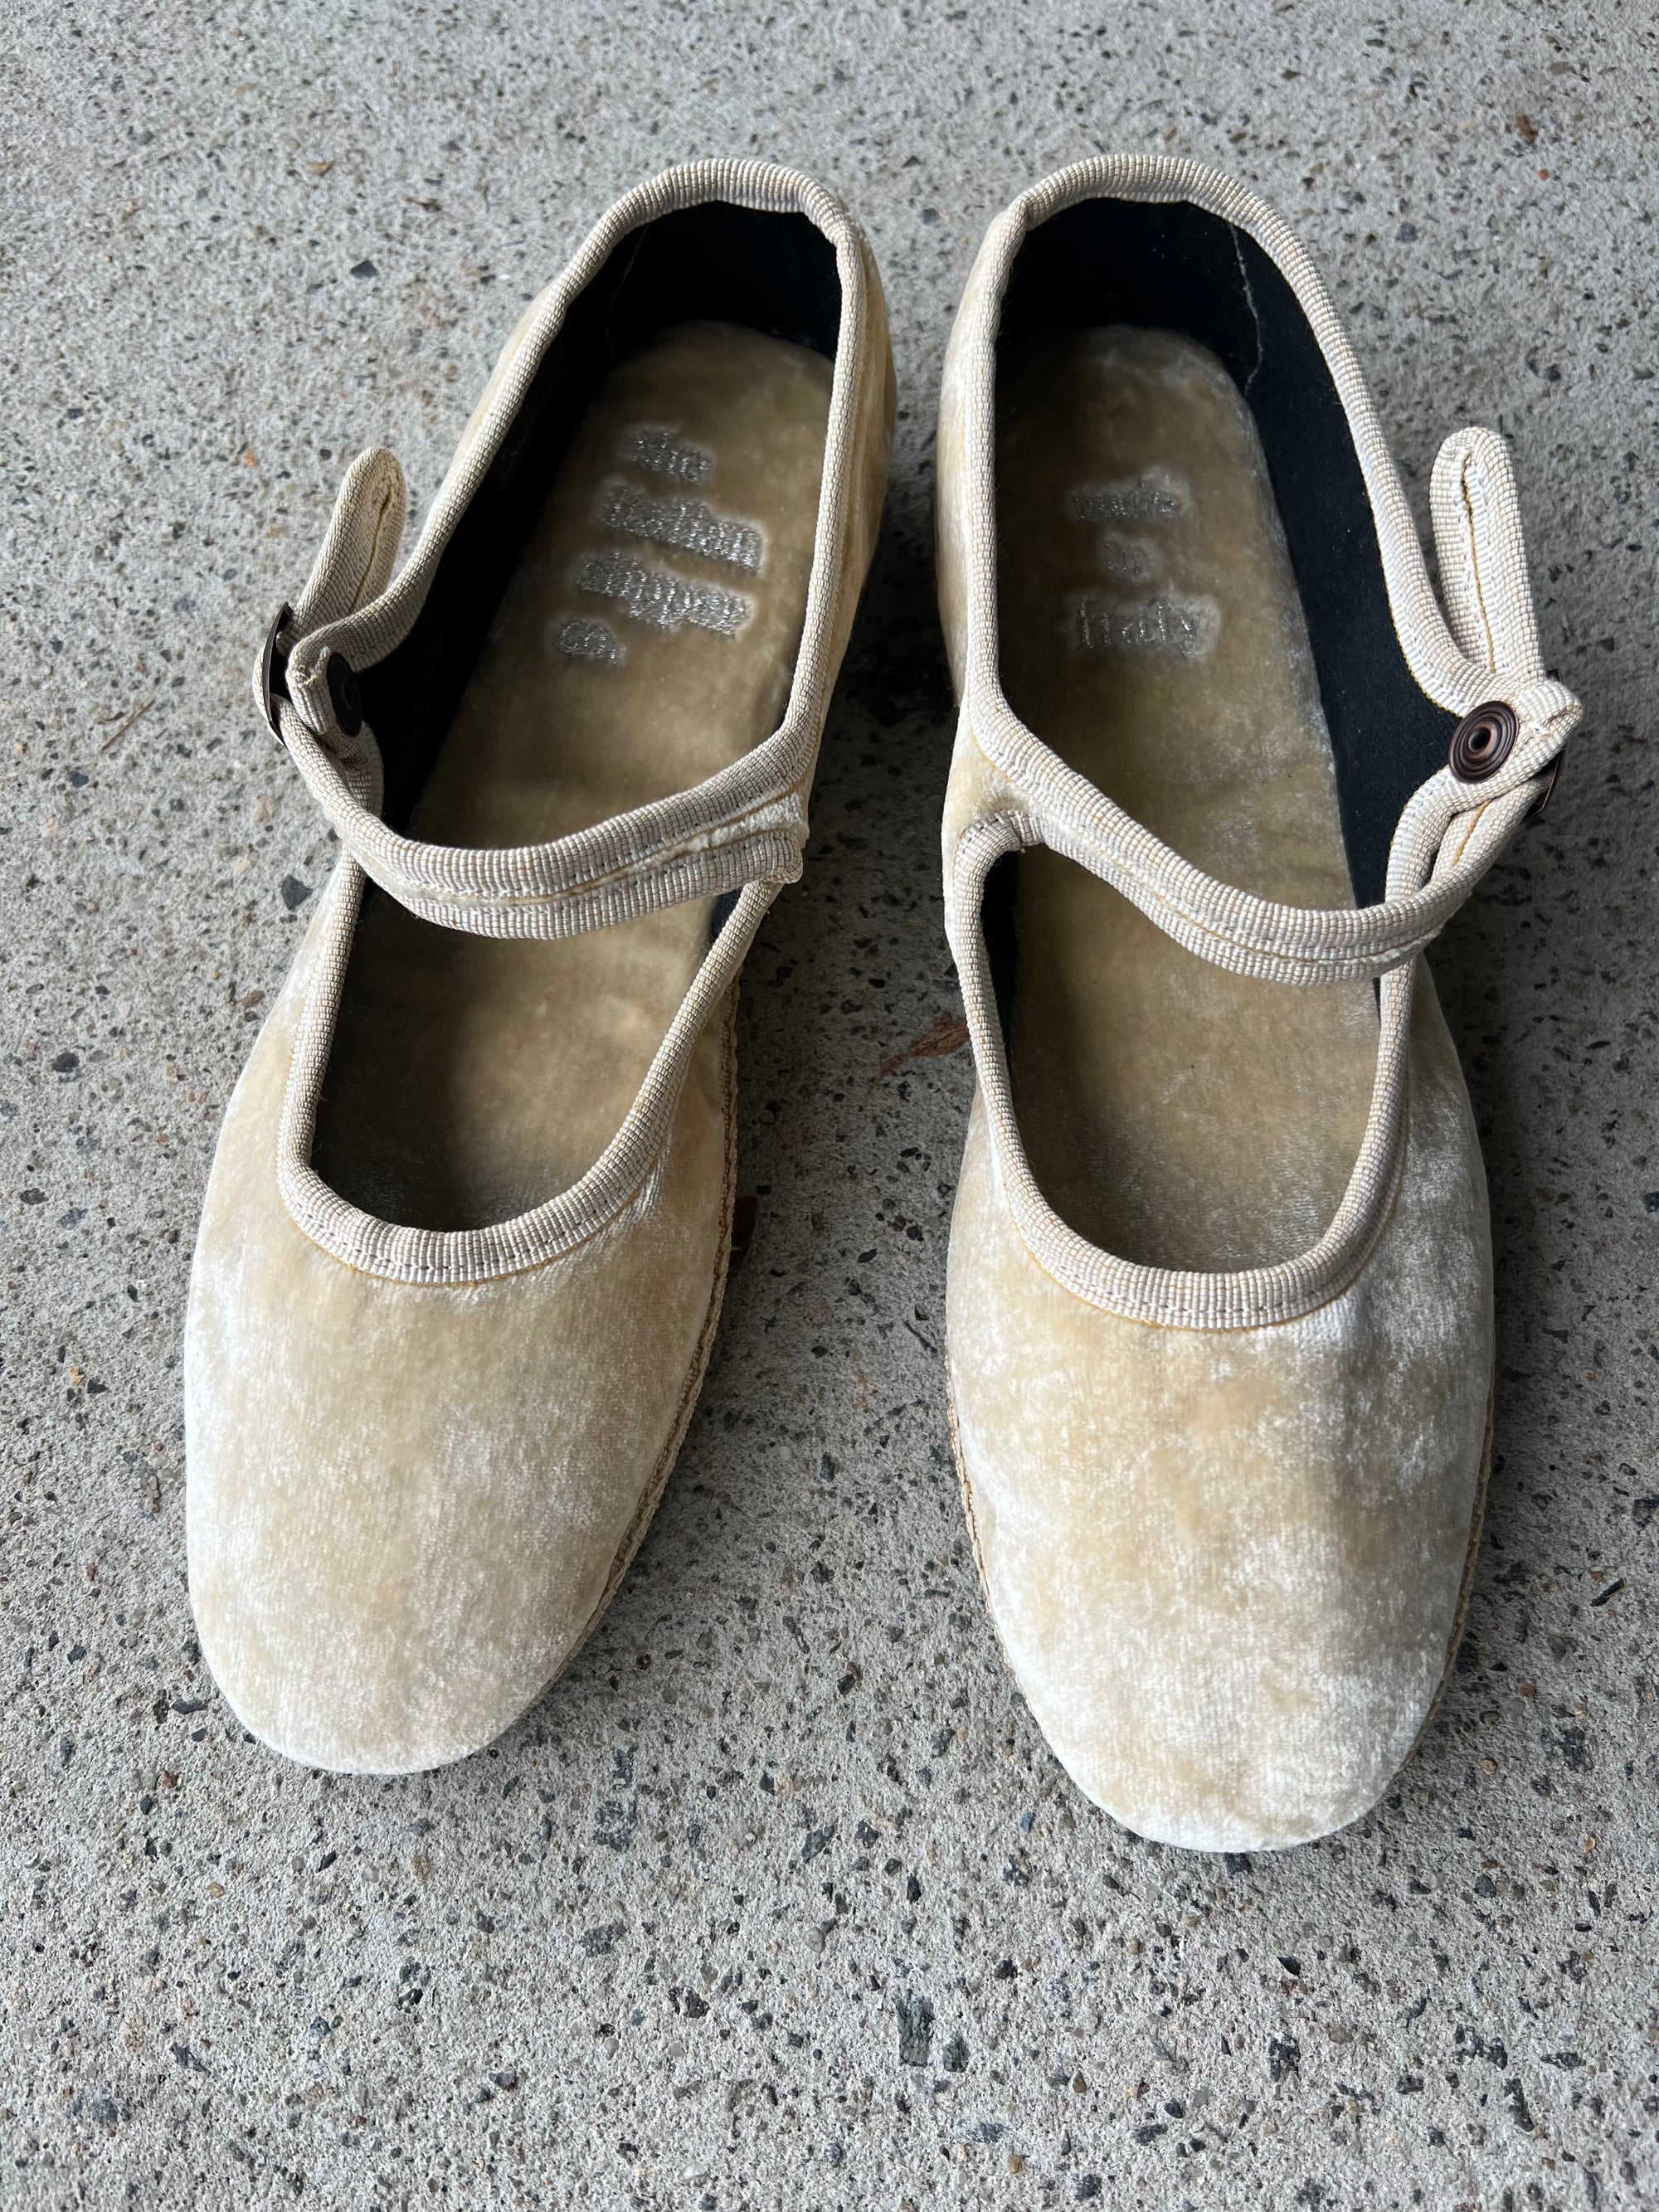 The Italian Bebe Ballet Shoe